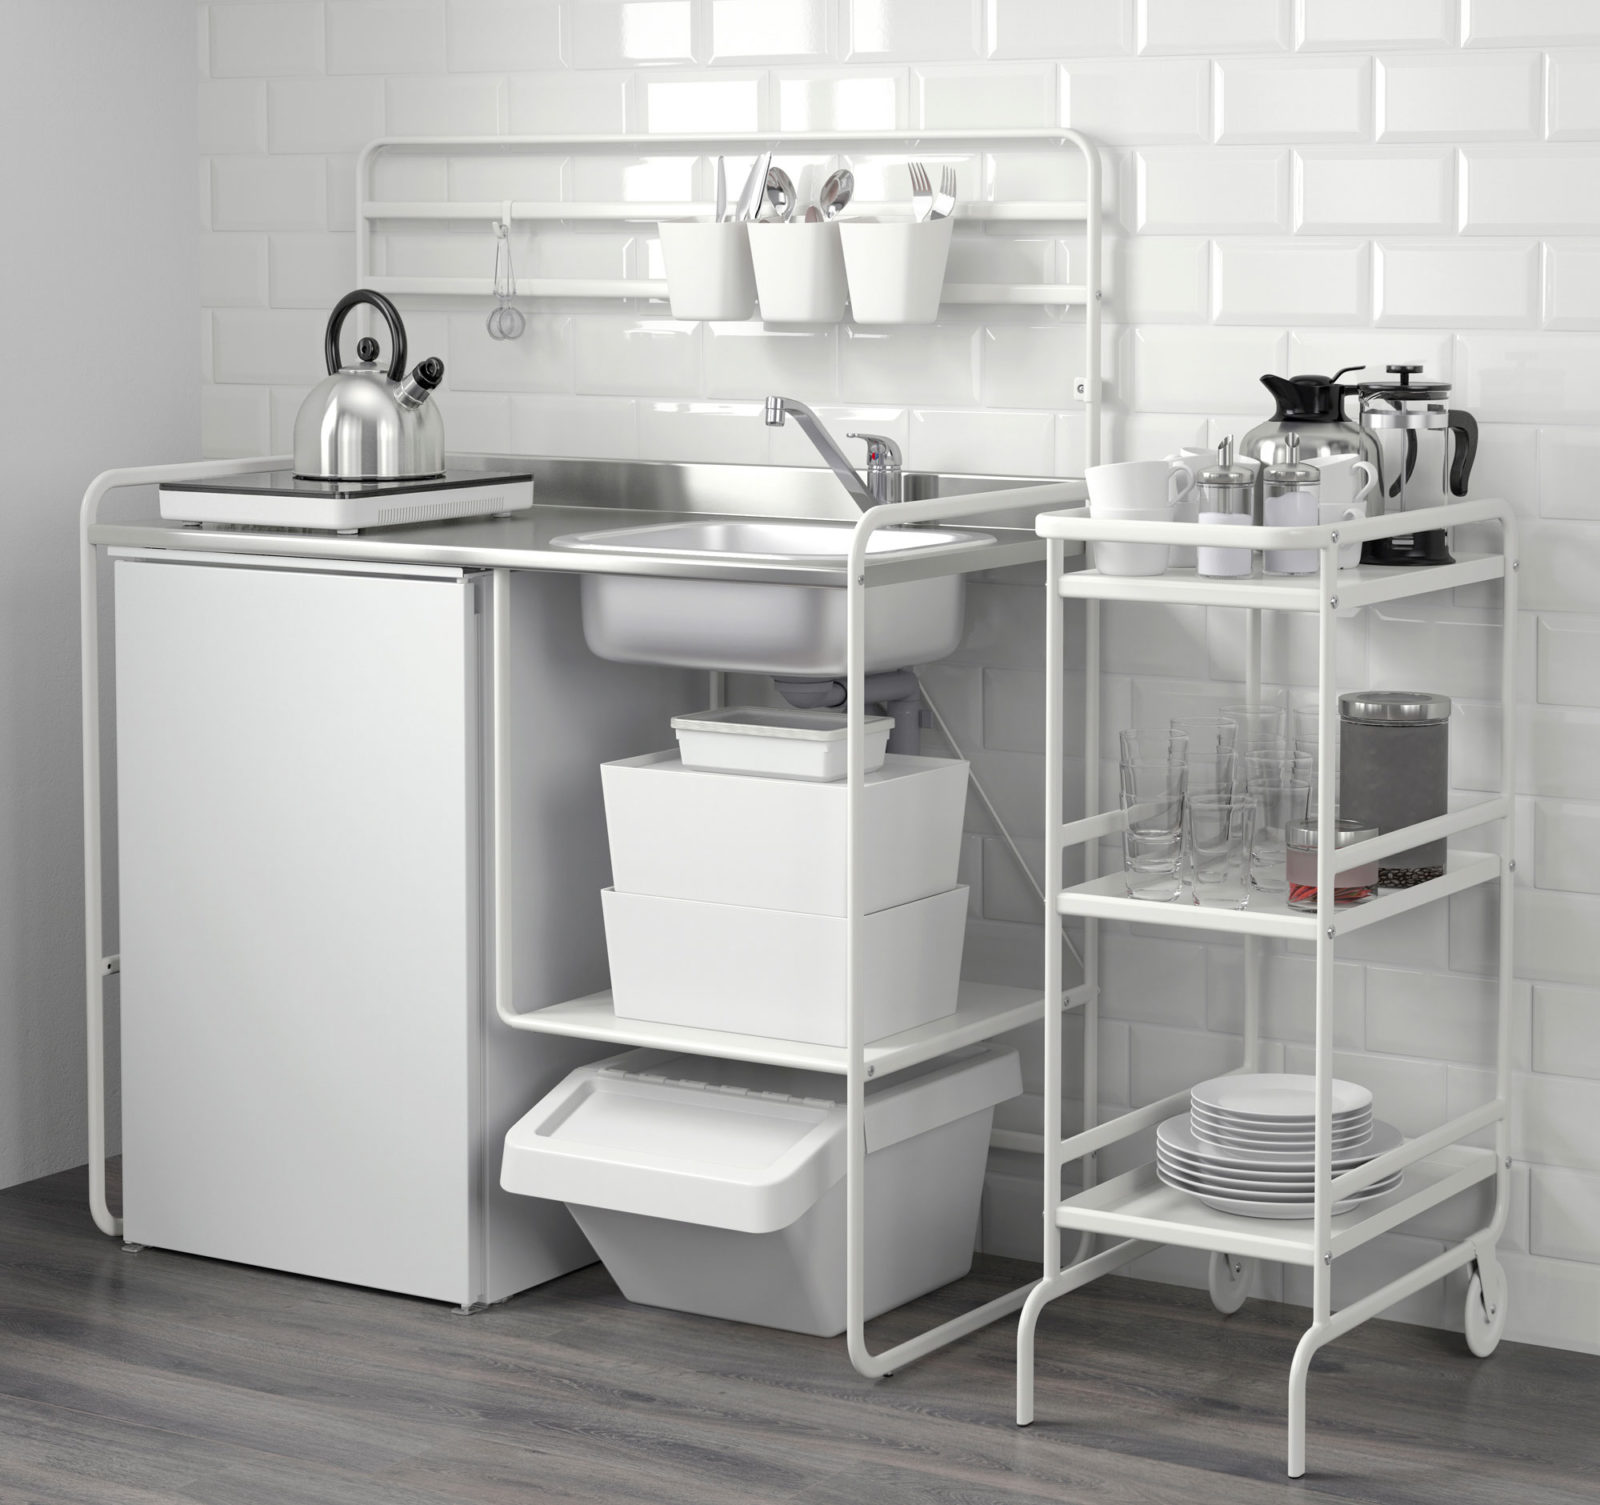 Freestanding mini-kitchen in white and chrome, SUNNERSTA.